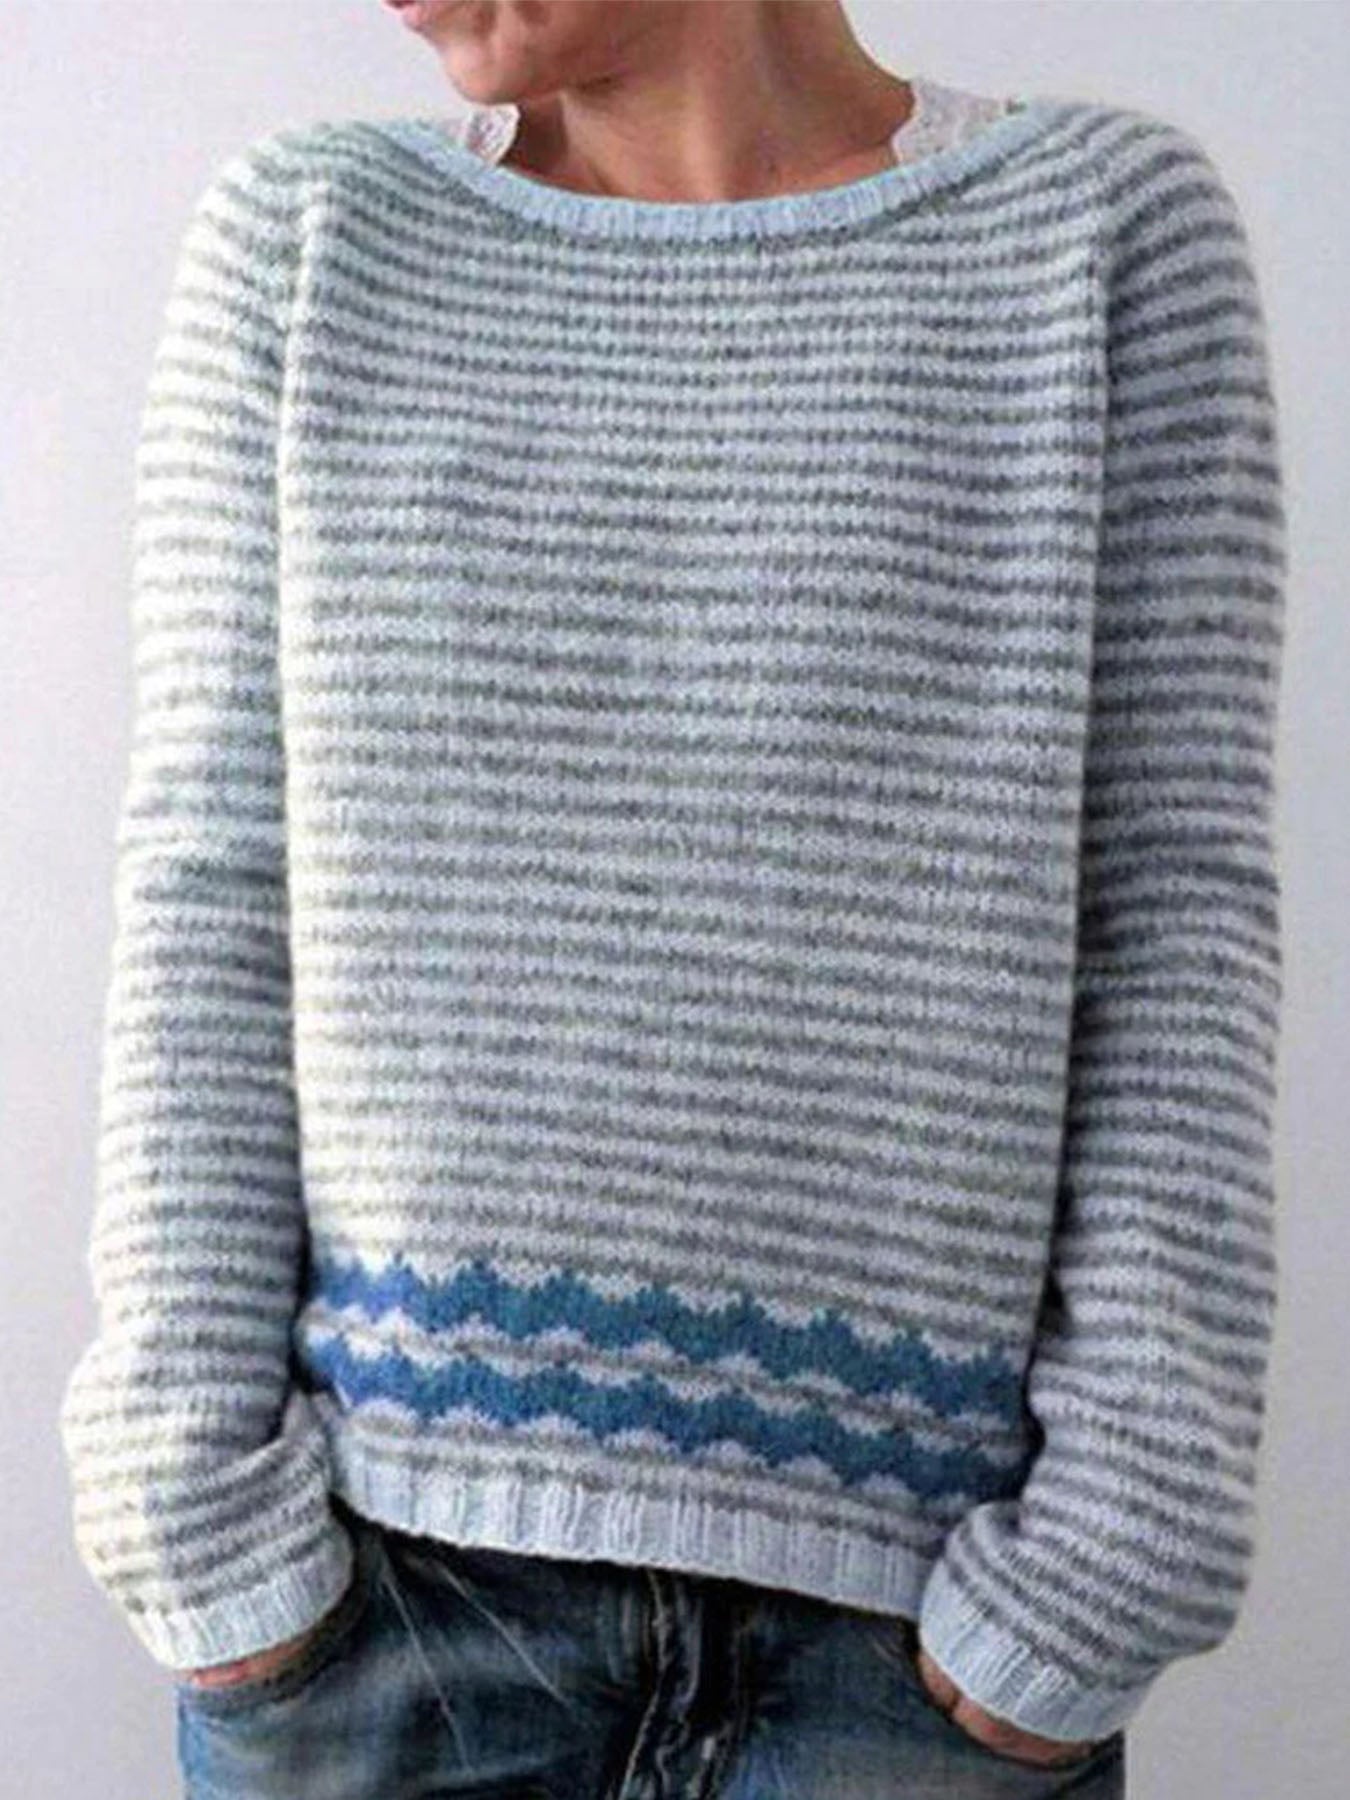 Vorioal Loose Knit Pullover